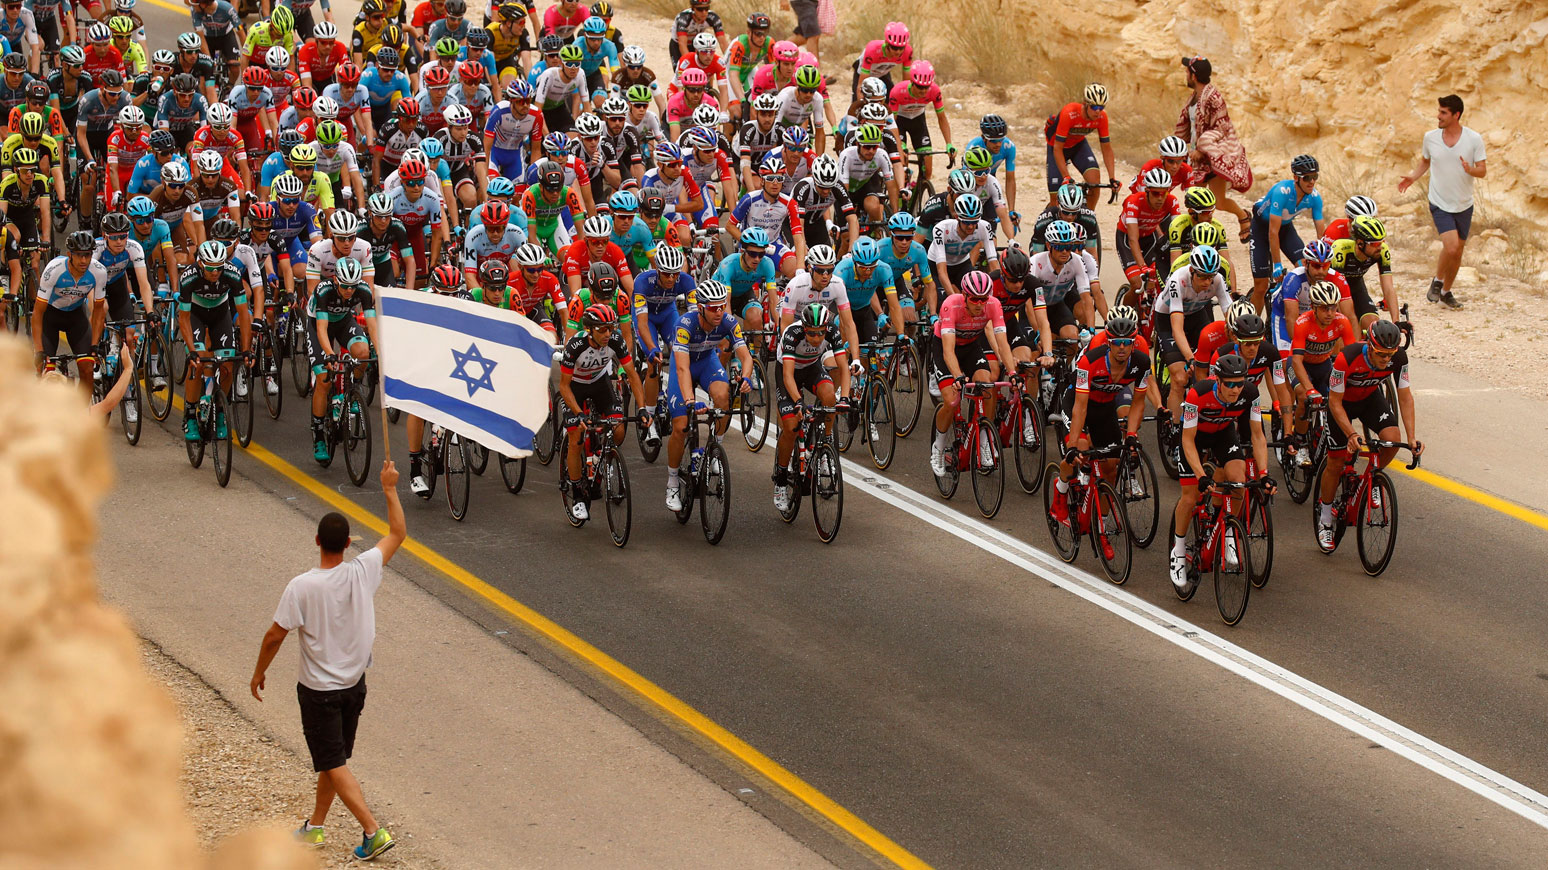 Giro d'Italia in Israel